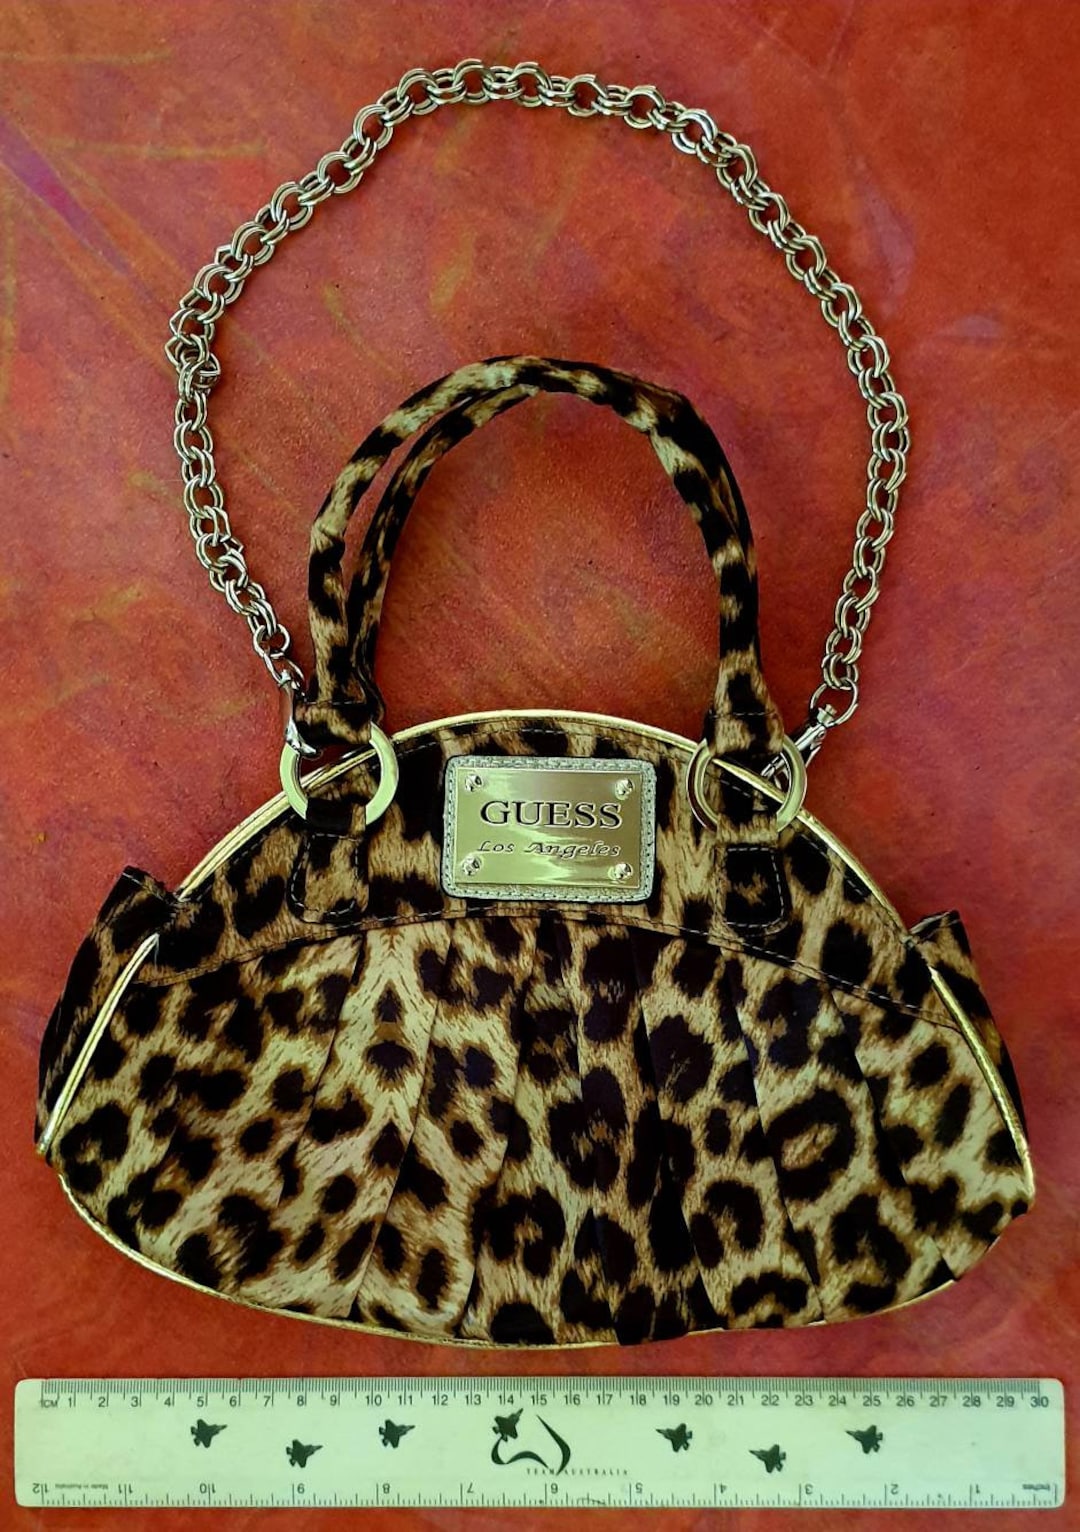 Guess leopard bag | Leopard bag, Bags, Guess bags